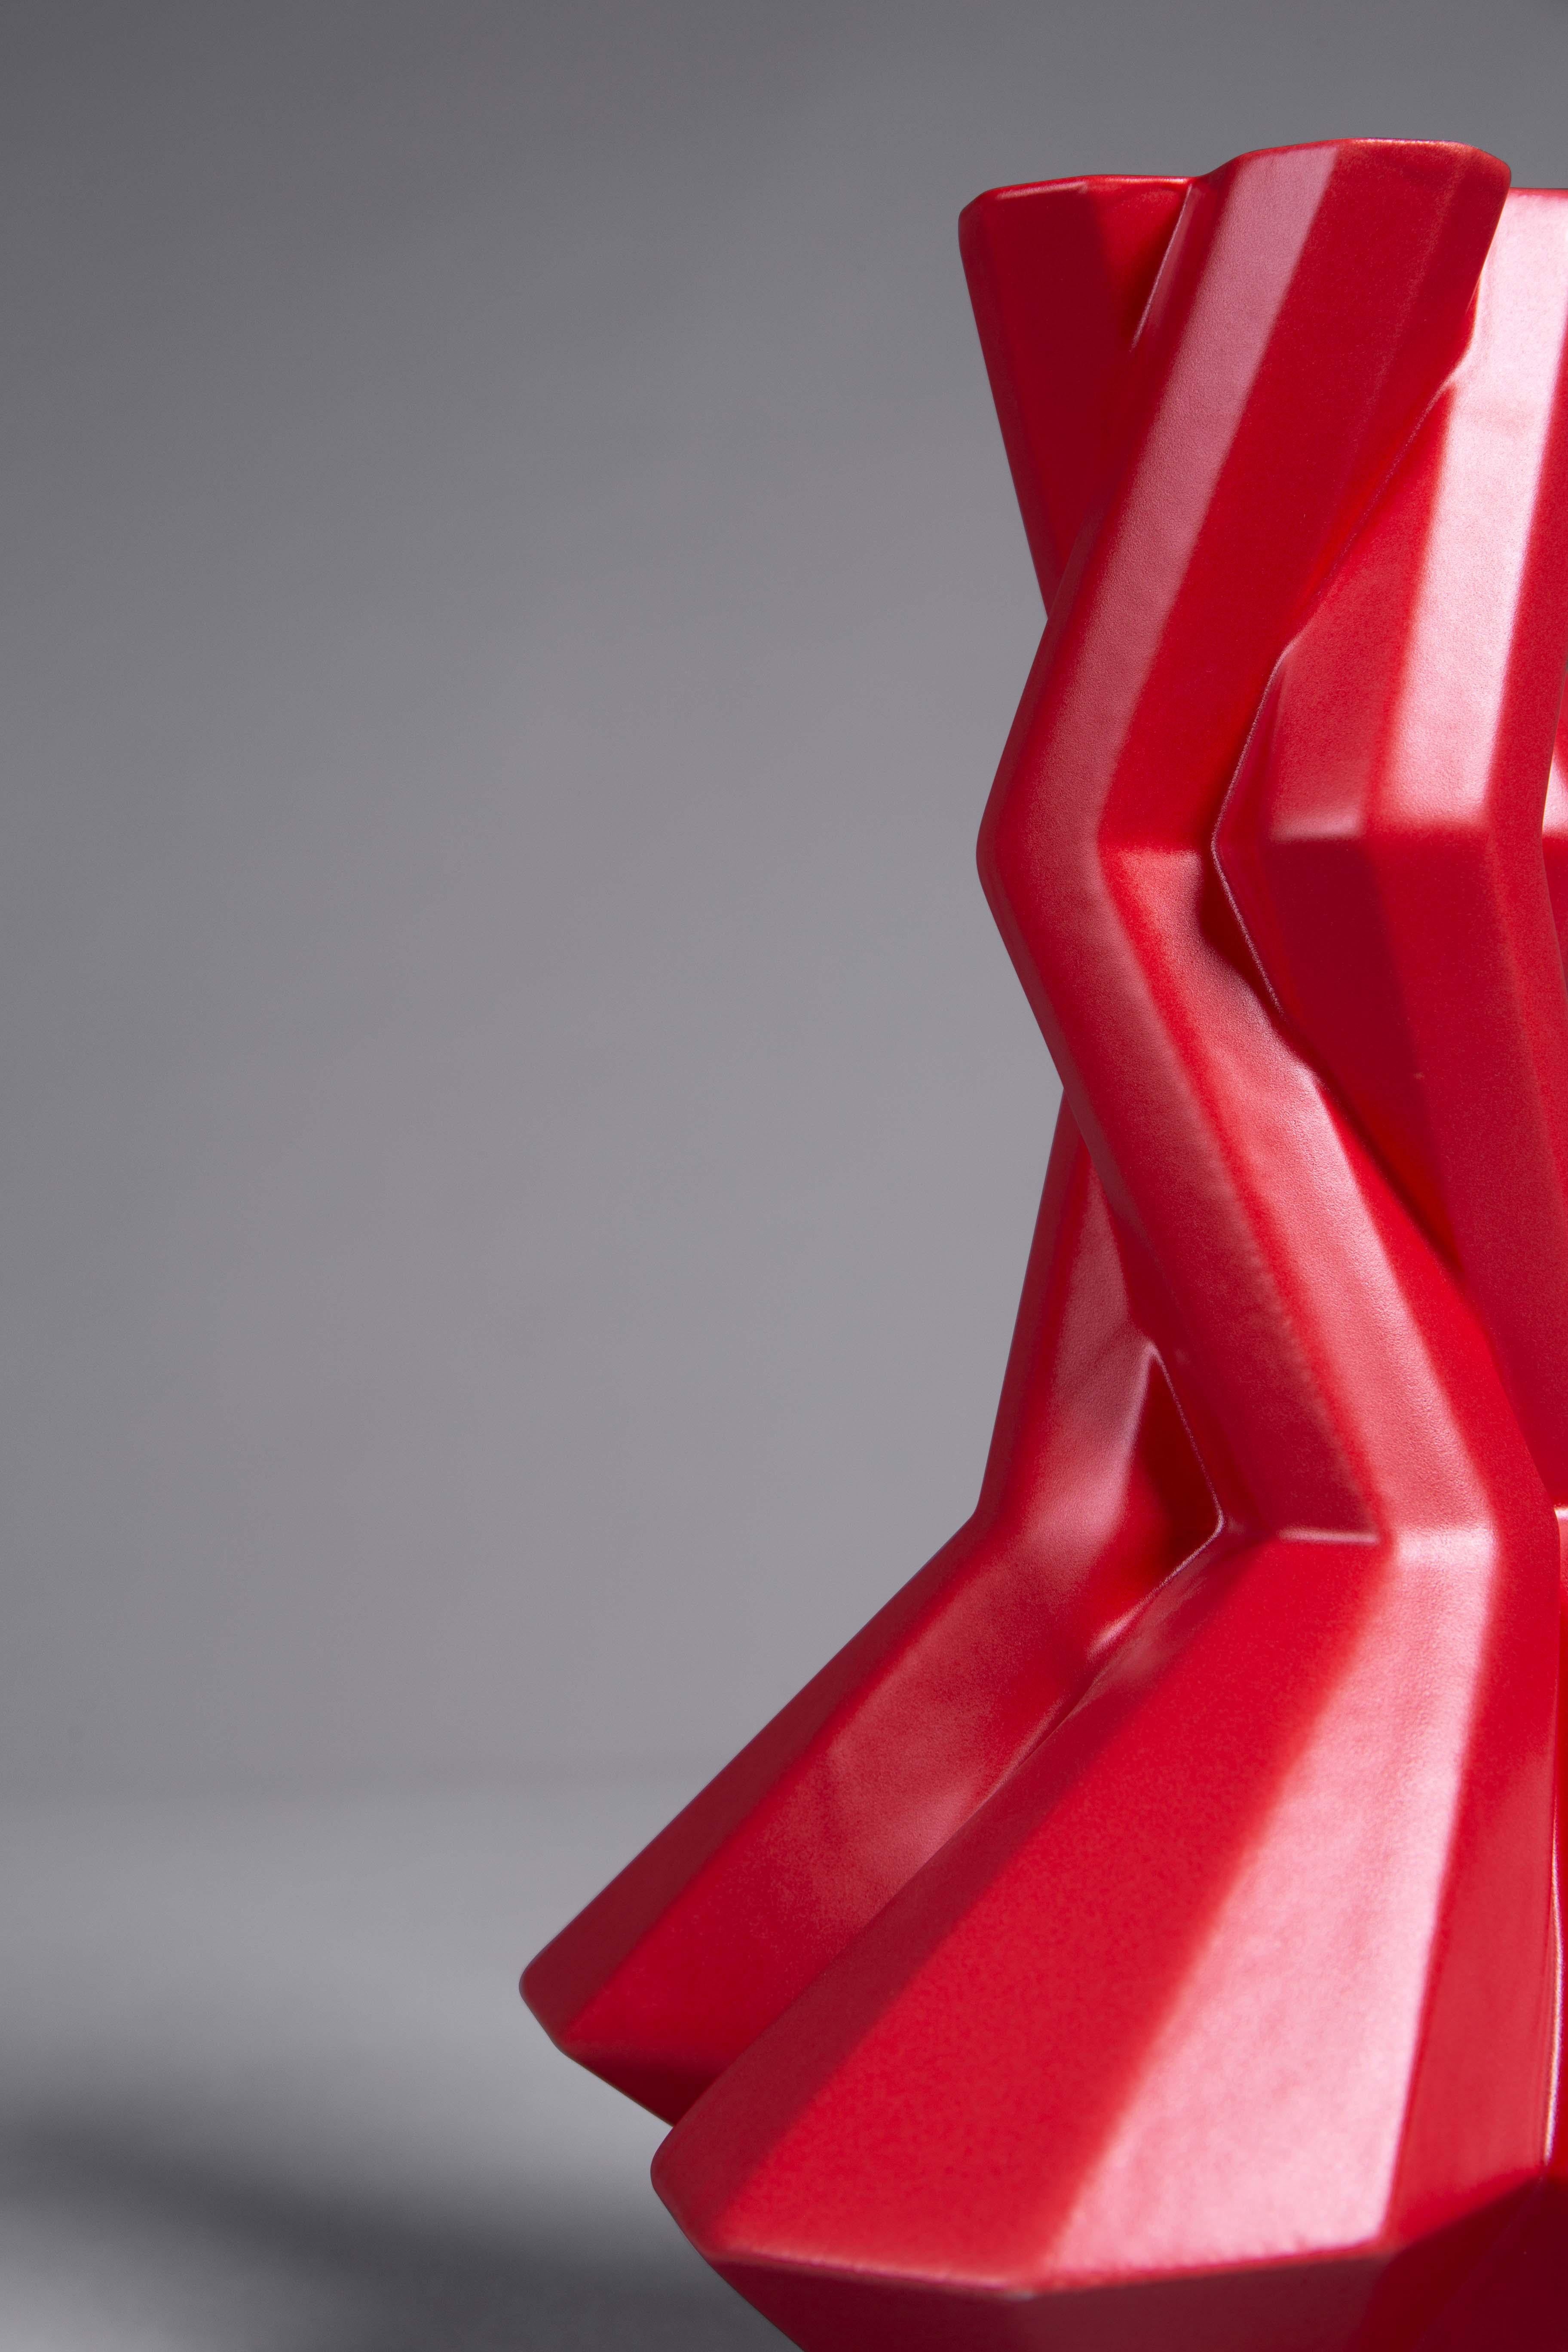 Modern Fortress Cupola Vase Red Ceramic Contemporary Geometric by Lara Bohinc, in Stock